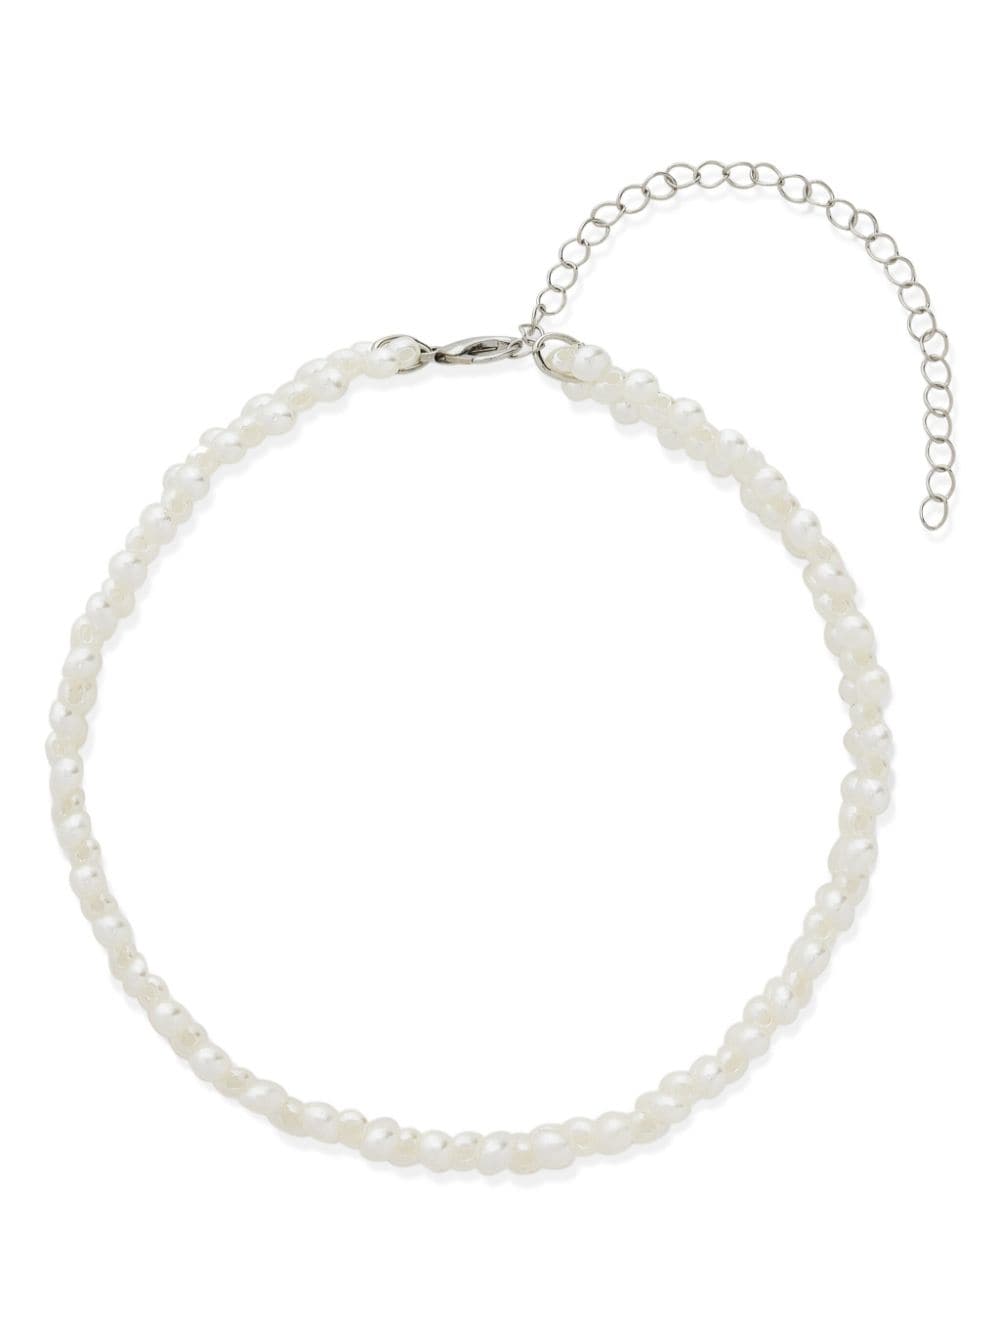 hzmer jewelry collier à perles artificielles - blanc